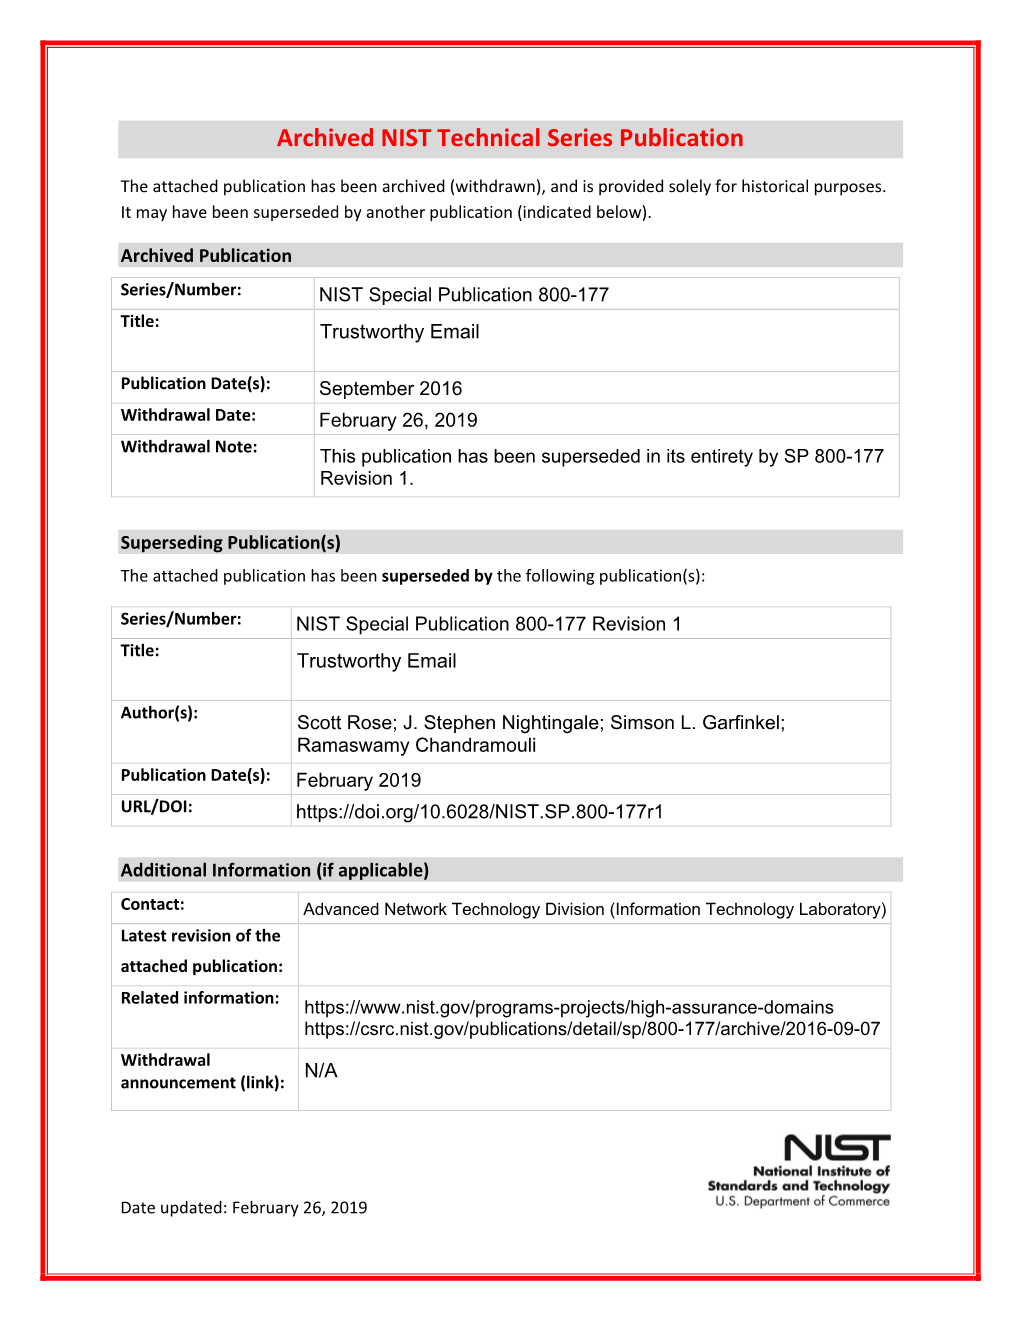 NIST SP 800-177 Trustworthy Email ______